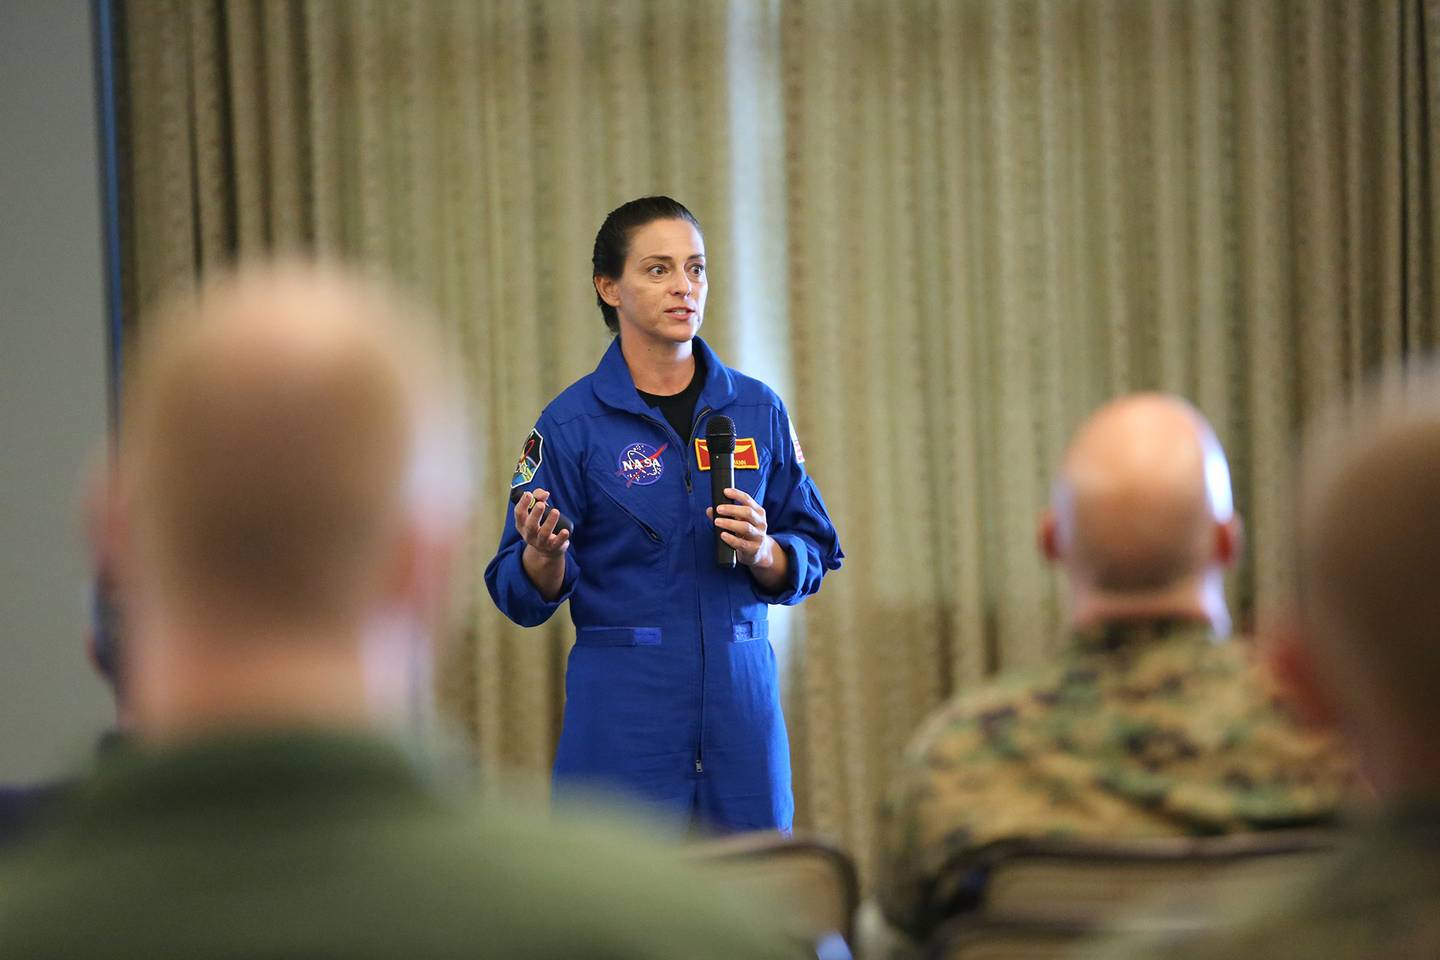 Lt. Col. Nicole “Duke” Mann hosts a seminar aboard Marine Corps Air Station Cherry Point, N.C., Oct. 11, 2016.